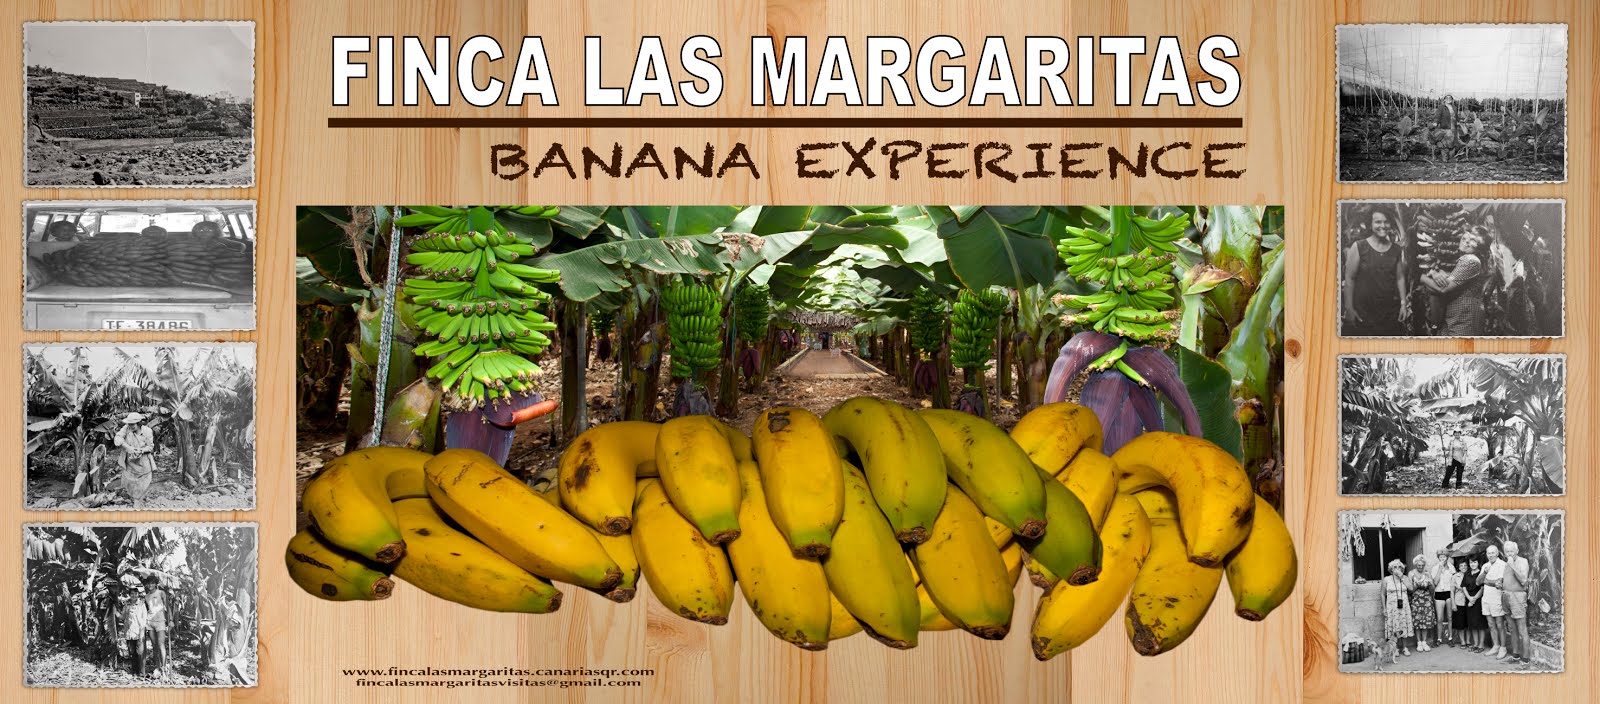 .FINCA LAS MARGARITAS, Banana Experience